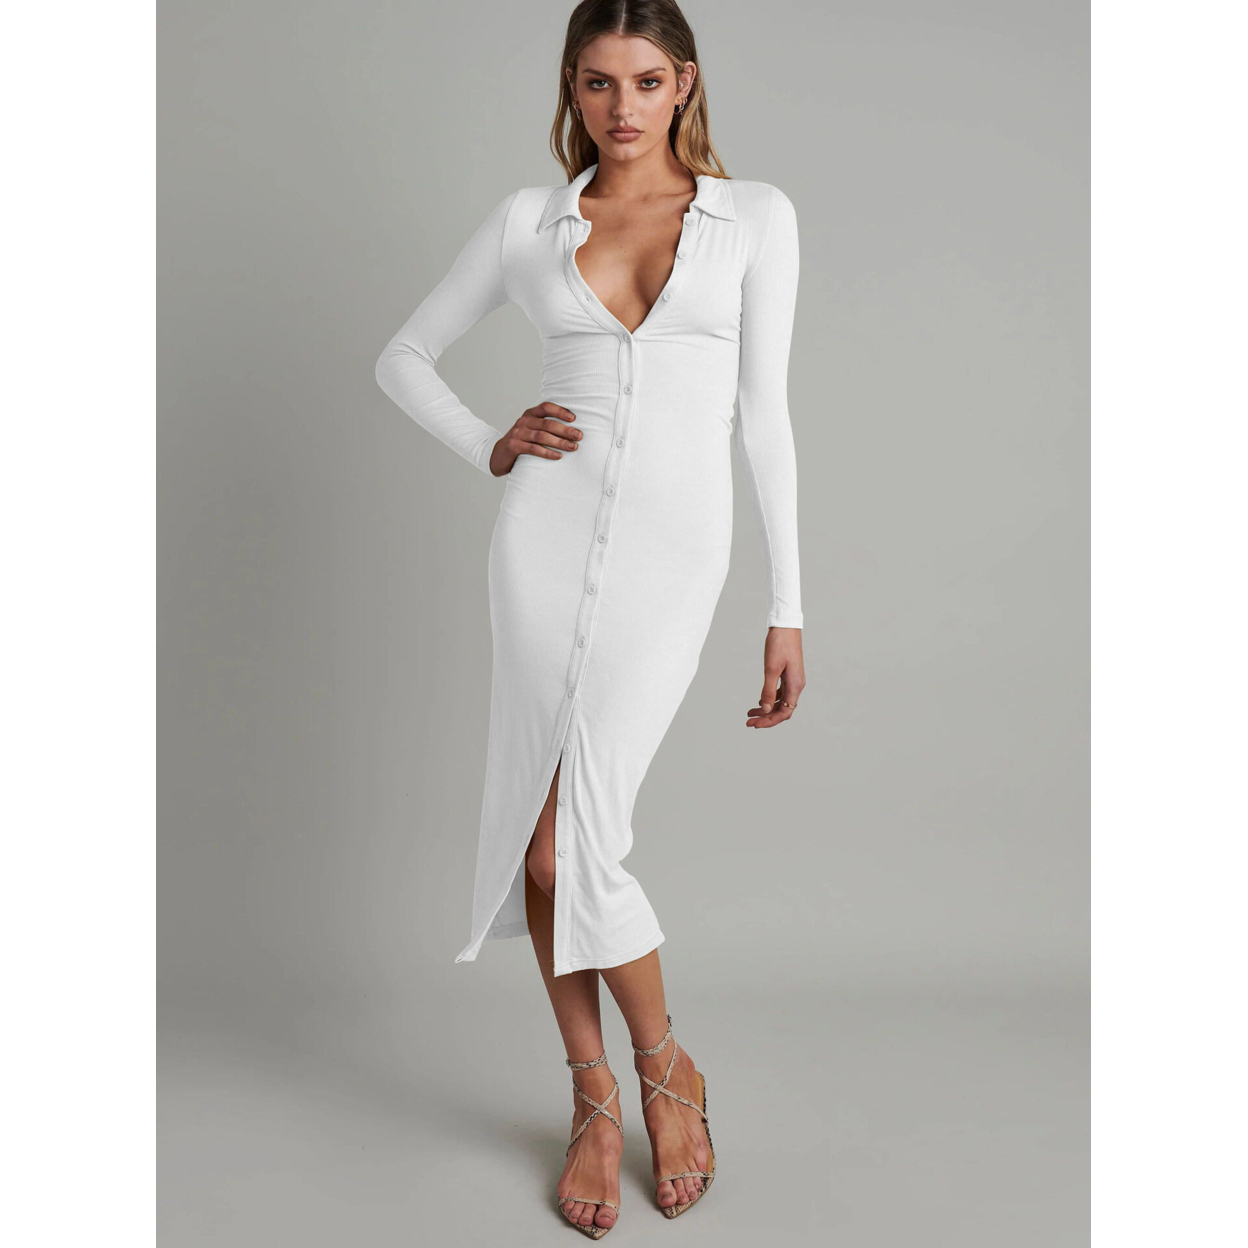 Sexy Fashion Cardigan Long Sleeve Shirt Skirt Women's Long Dress - White, M